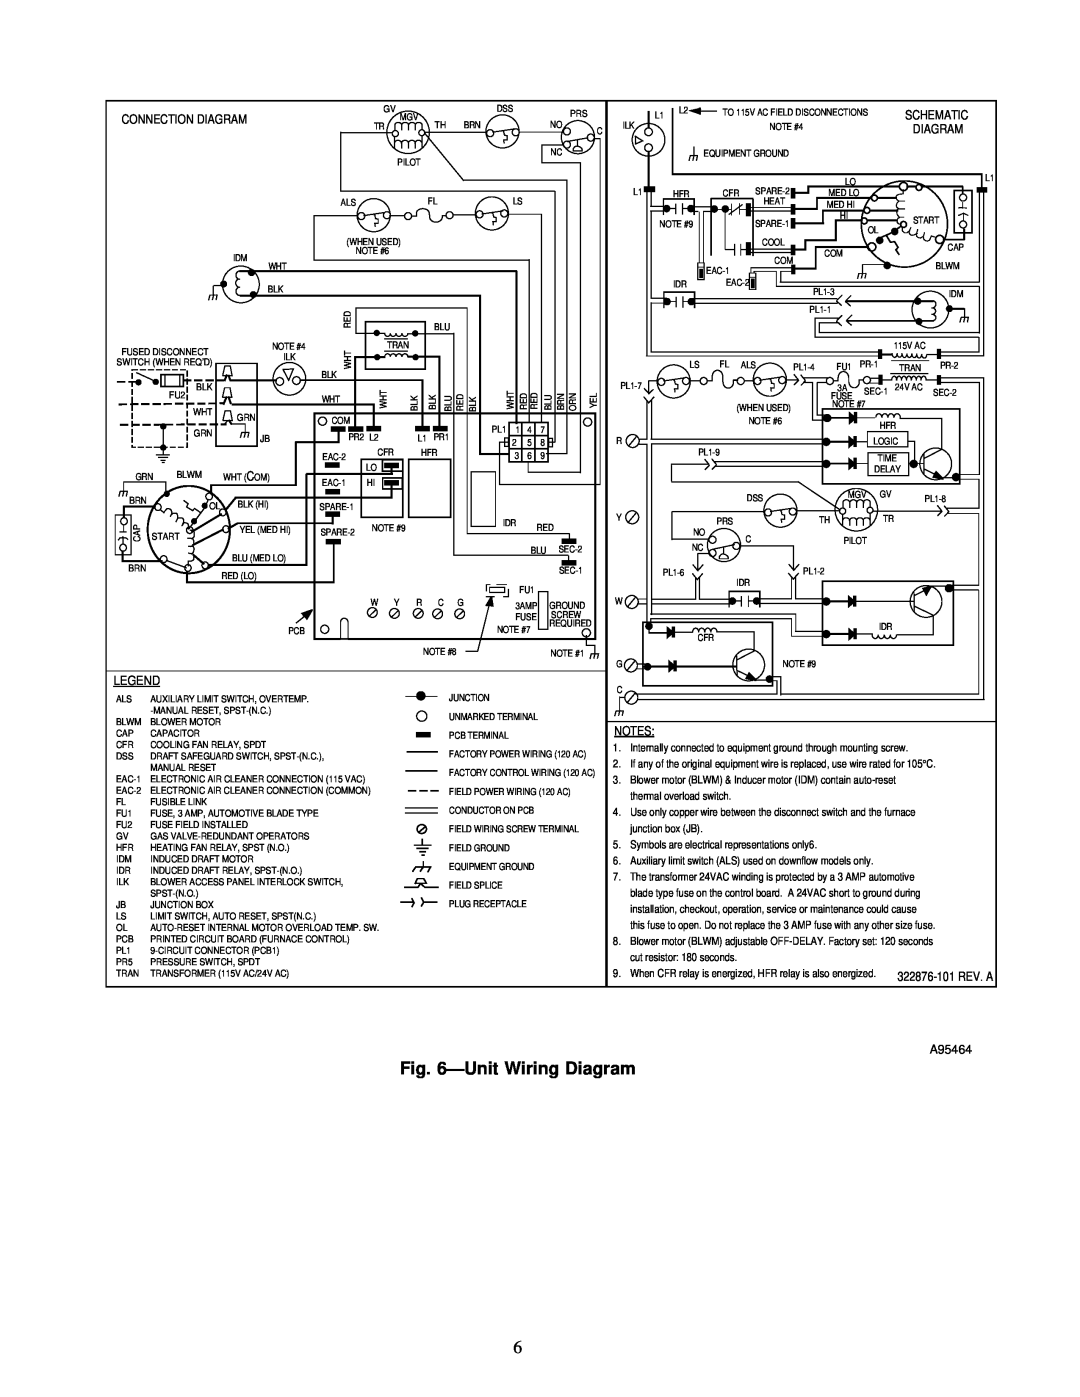 Carrier 58GFA instruction manual ÐUnit Wiring Diagram, Connection Diagram 